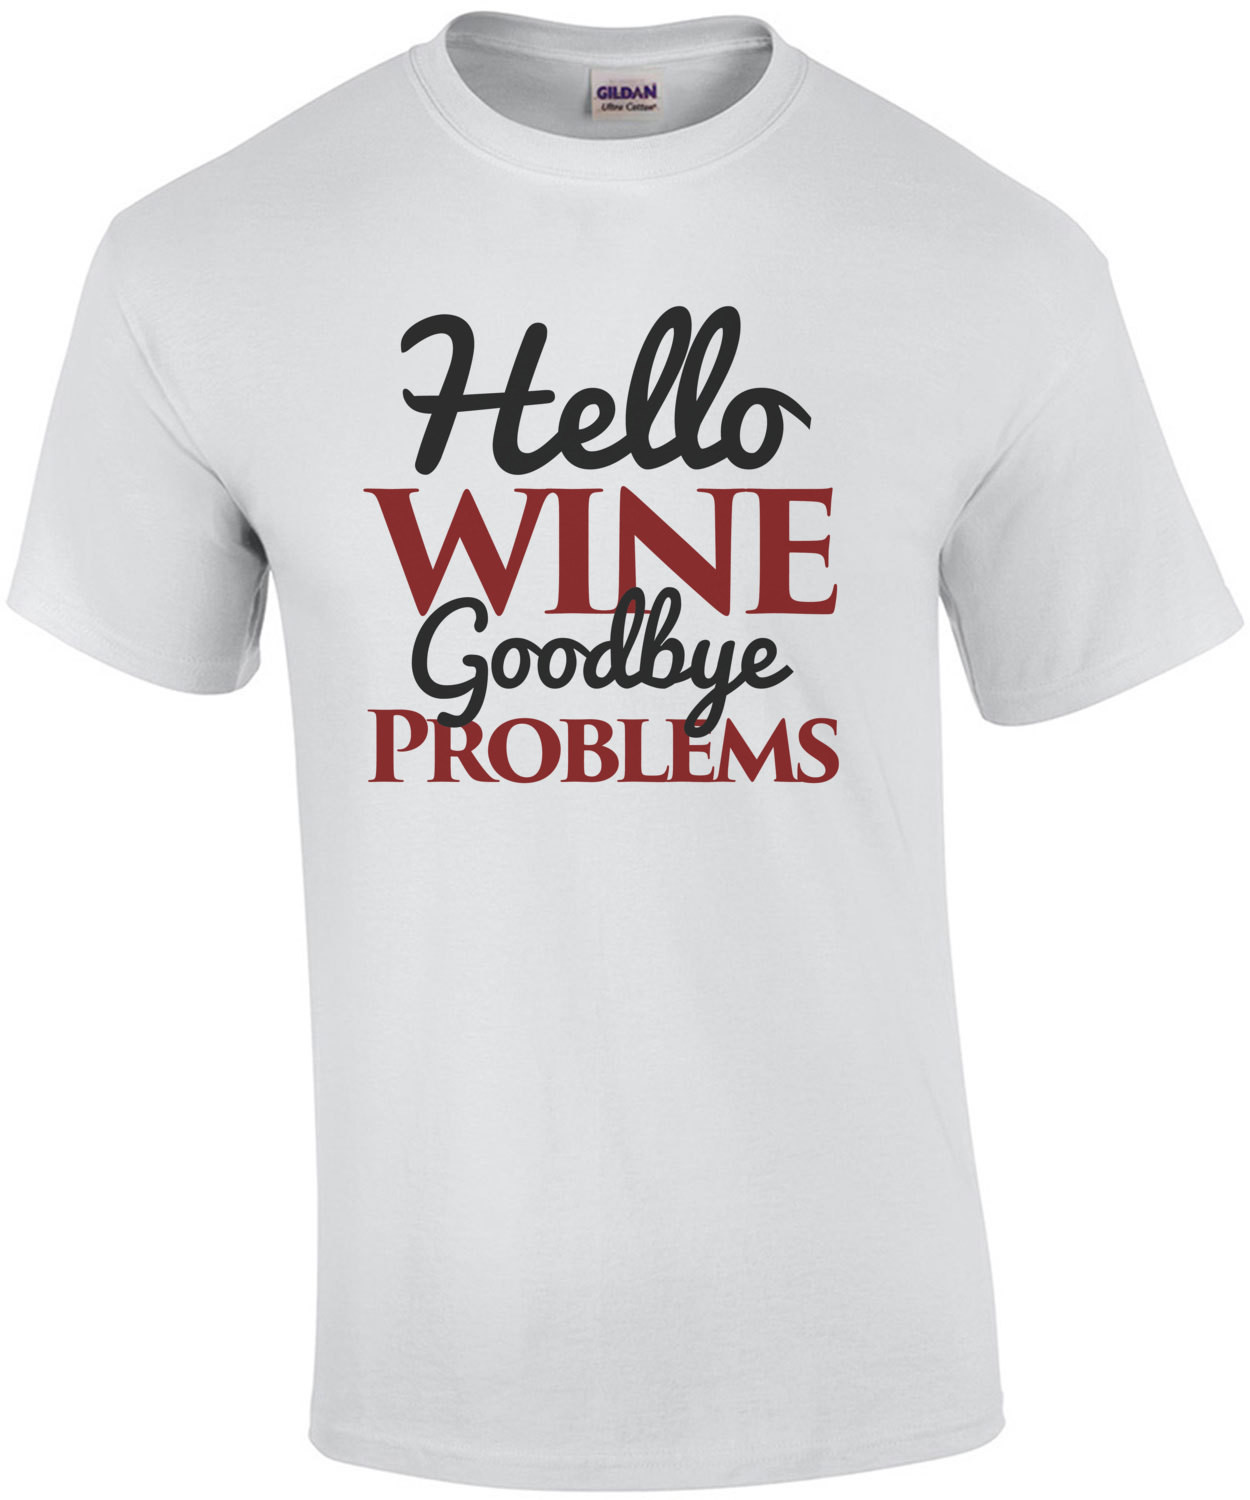 Hello Wine - Goodbye Problems - Funny wine t-shirt